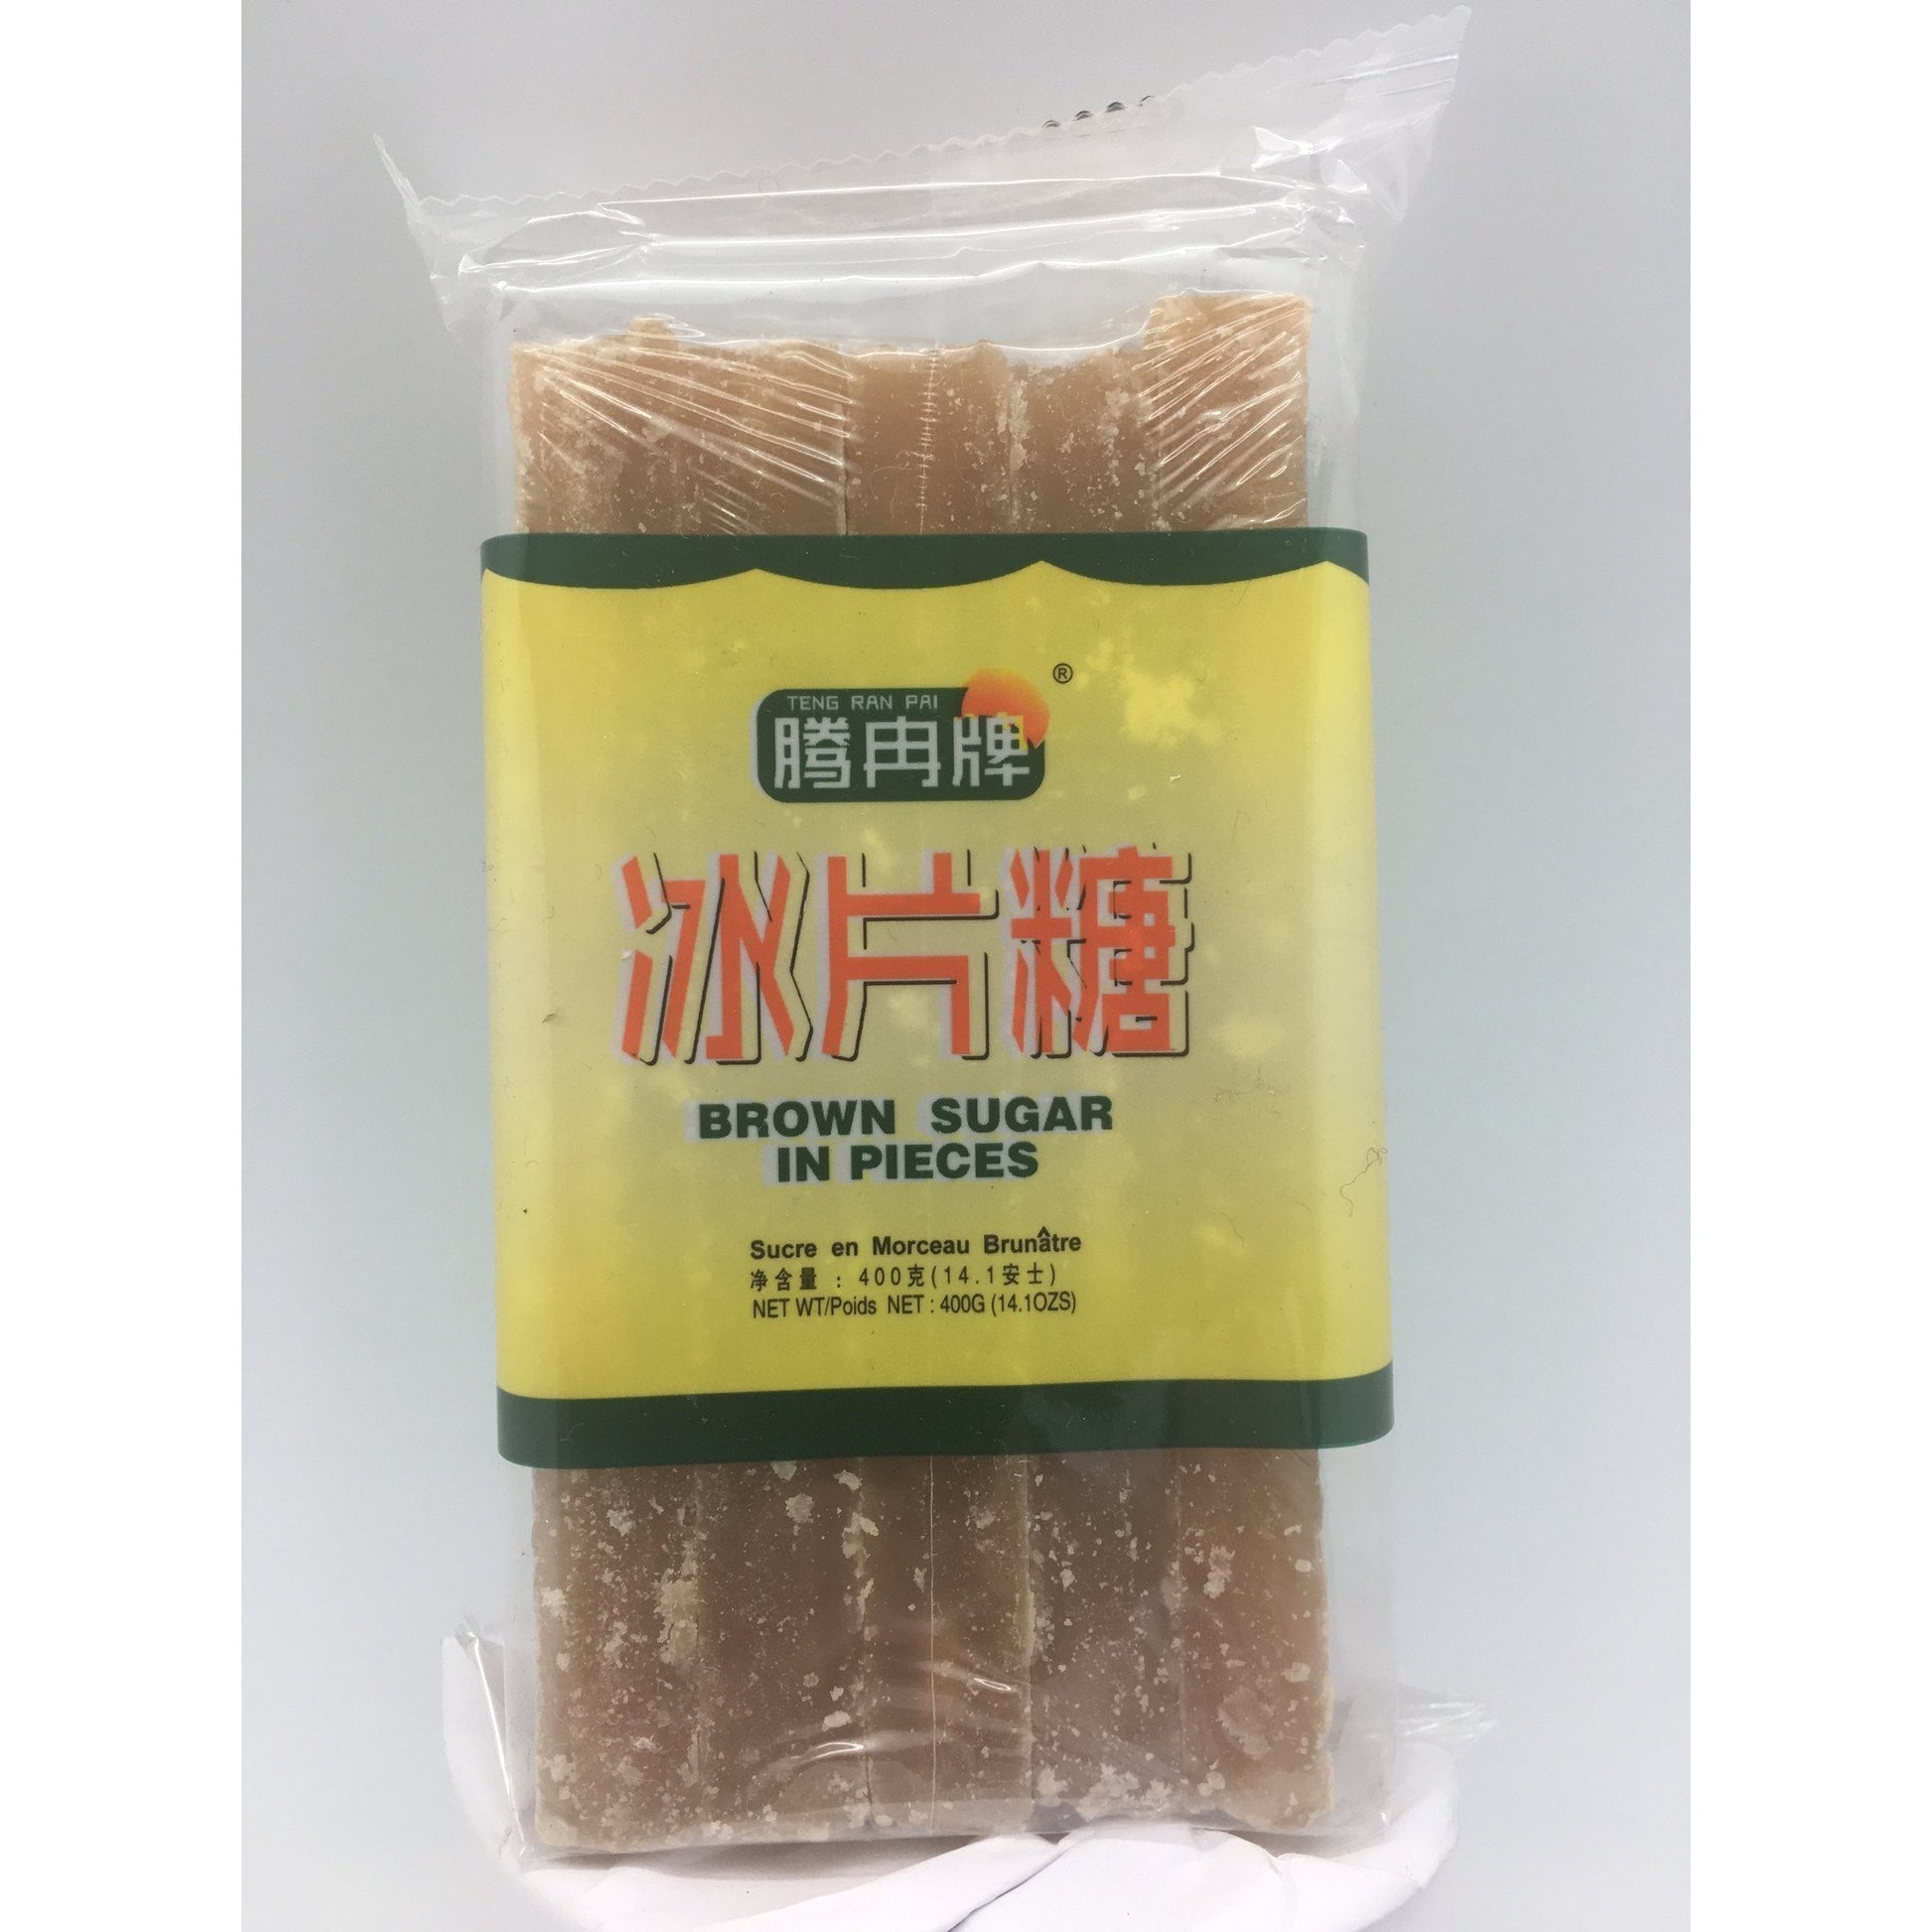 D231 Teng Ran Pai - Brown Sugar in pieces 400g - 50 bags / 1 CTN - New Eastland Pty Ltd - Asian food wholesalers